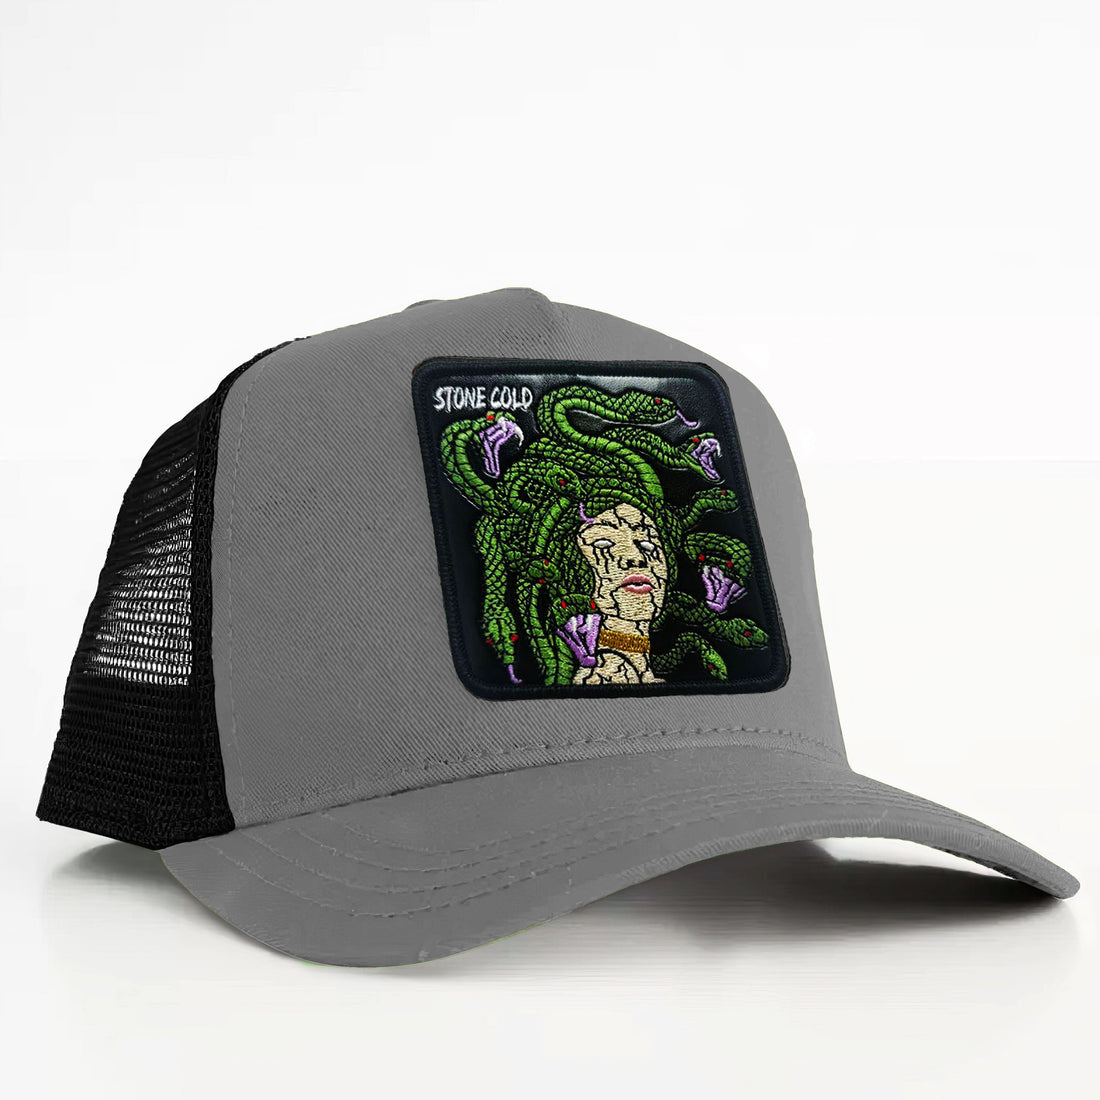 Medusa - "Stone cold" Trucker Hat